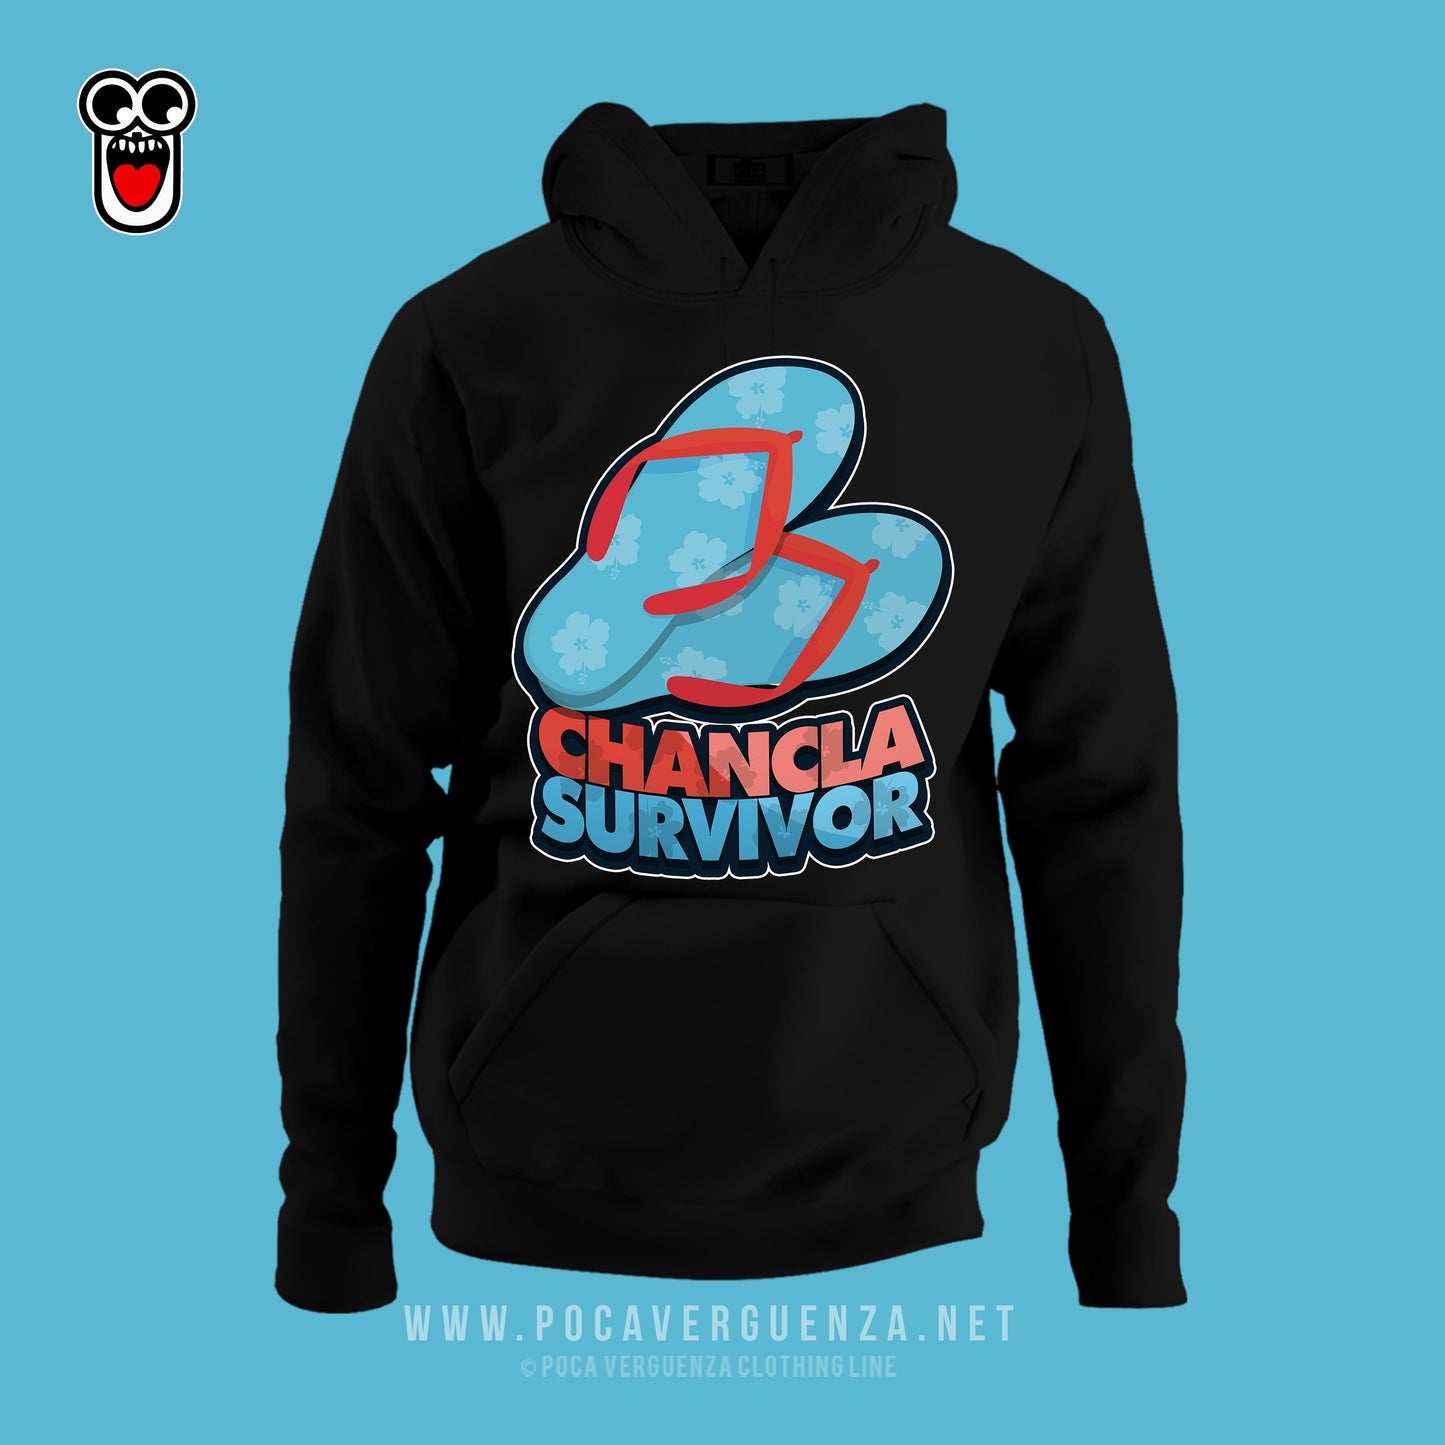 Chancla Survivor pocaverguenza Camisetas